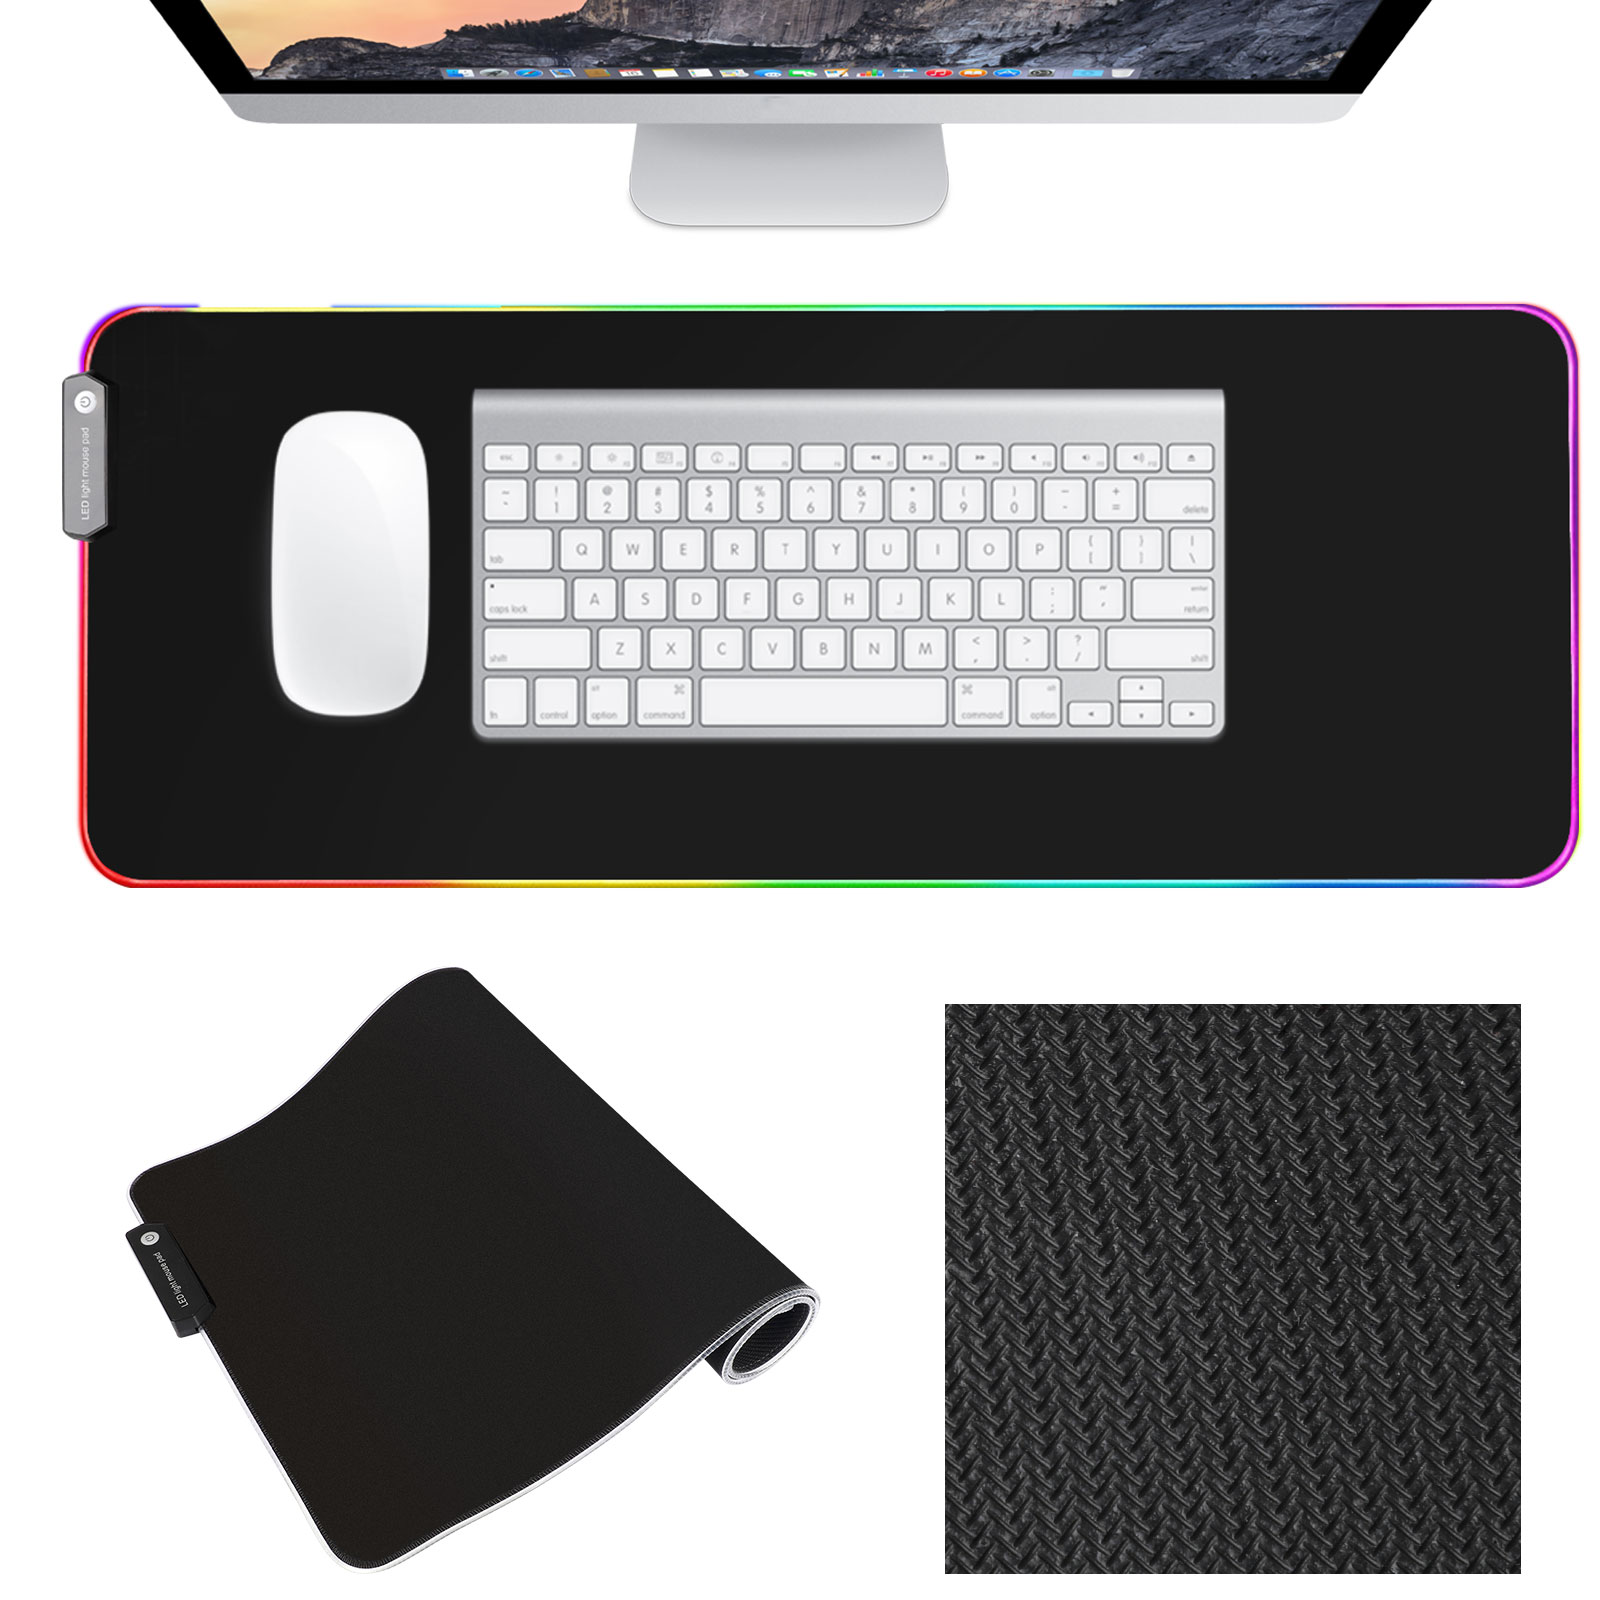 RGB LED Backlit Extra Large Gaming Keyboard Mouse Pad 9 Color Lighting